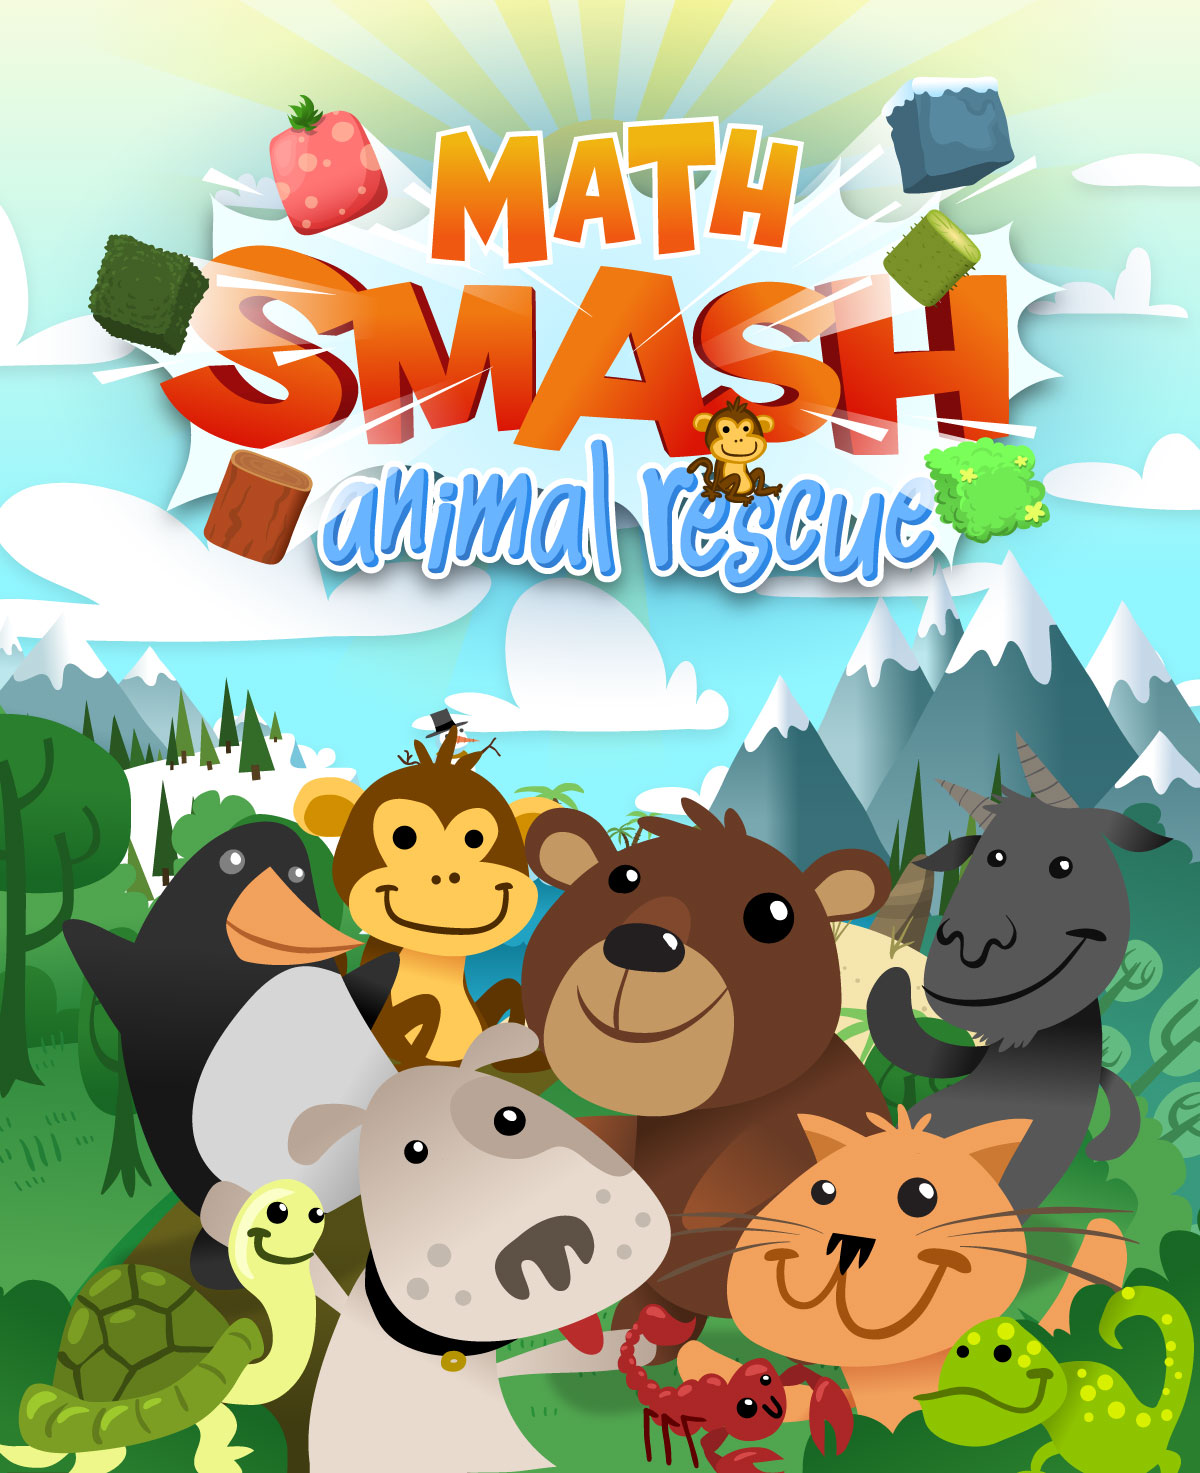 Math Smash: Animal Rescue